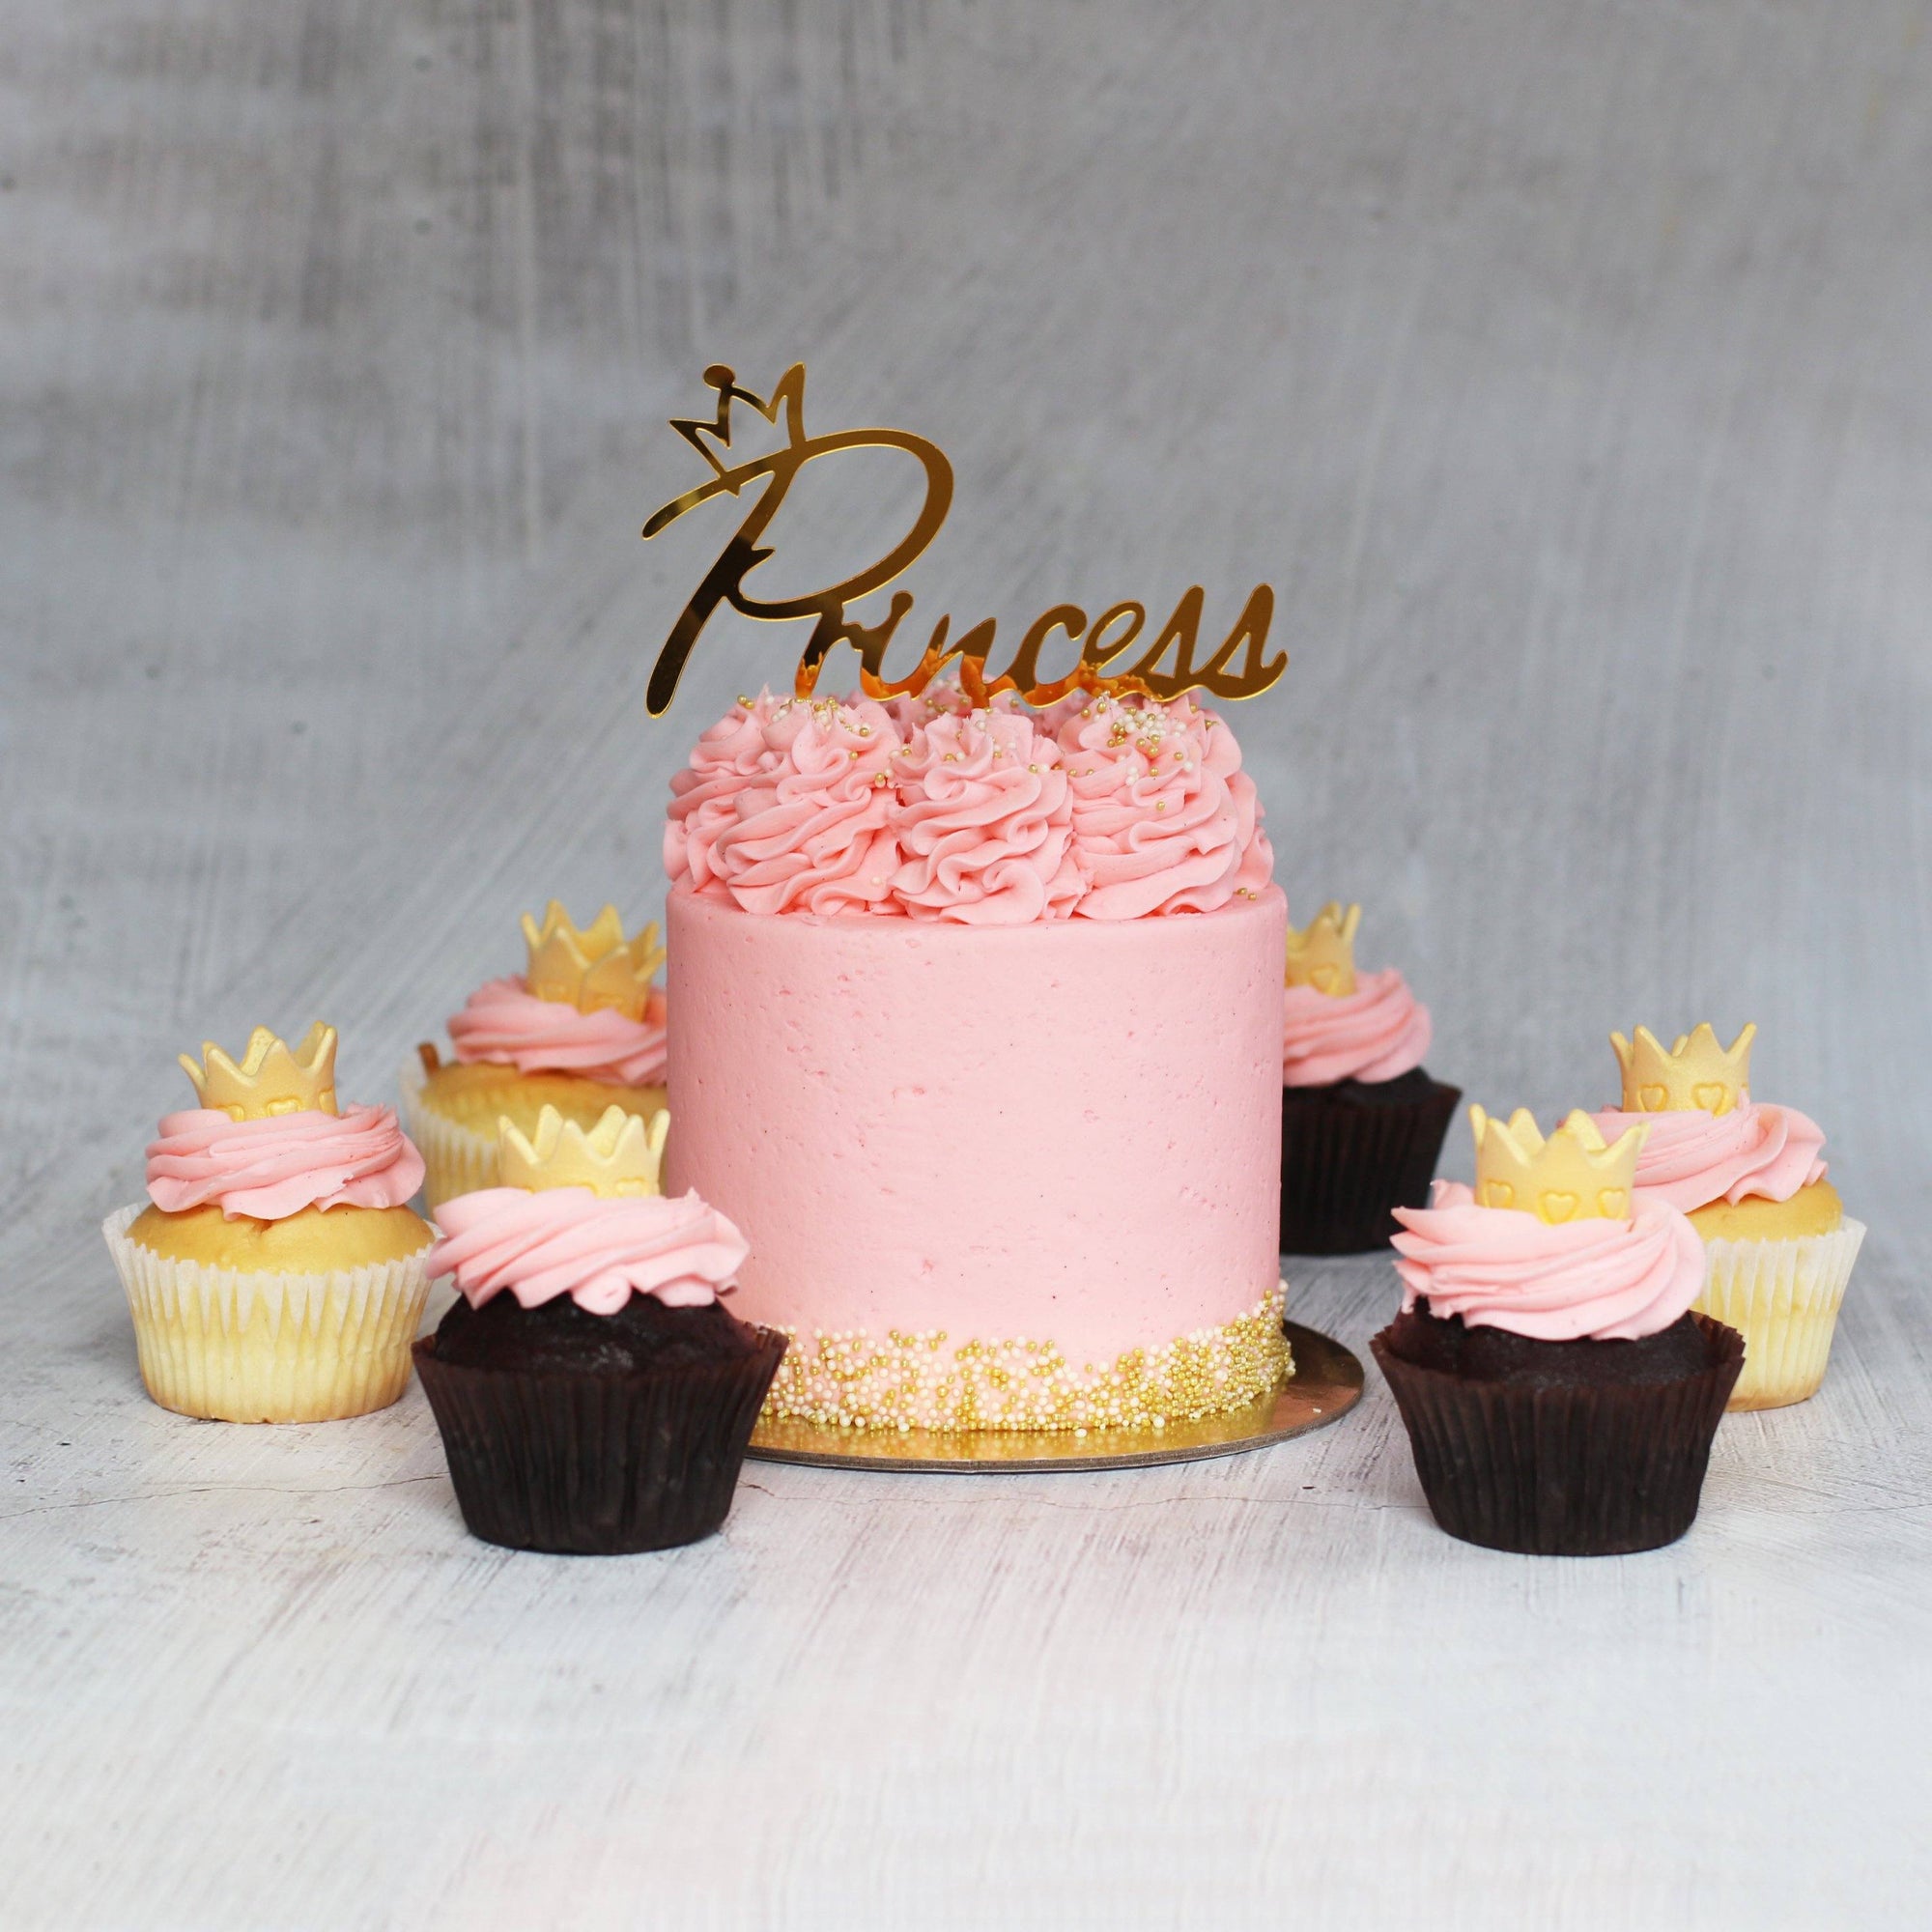 Princess Cake - The Cupcake Queens 